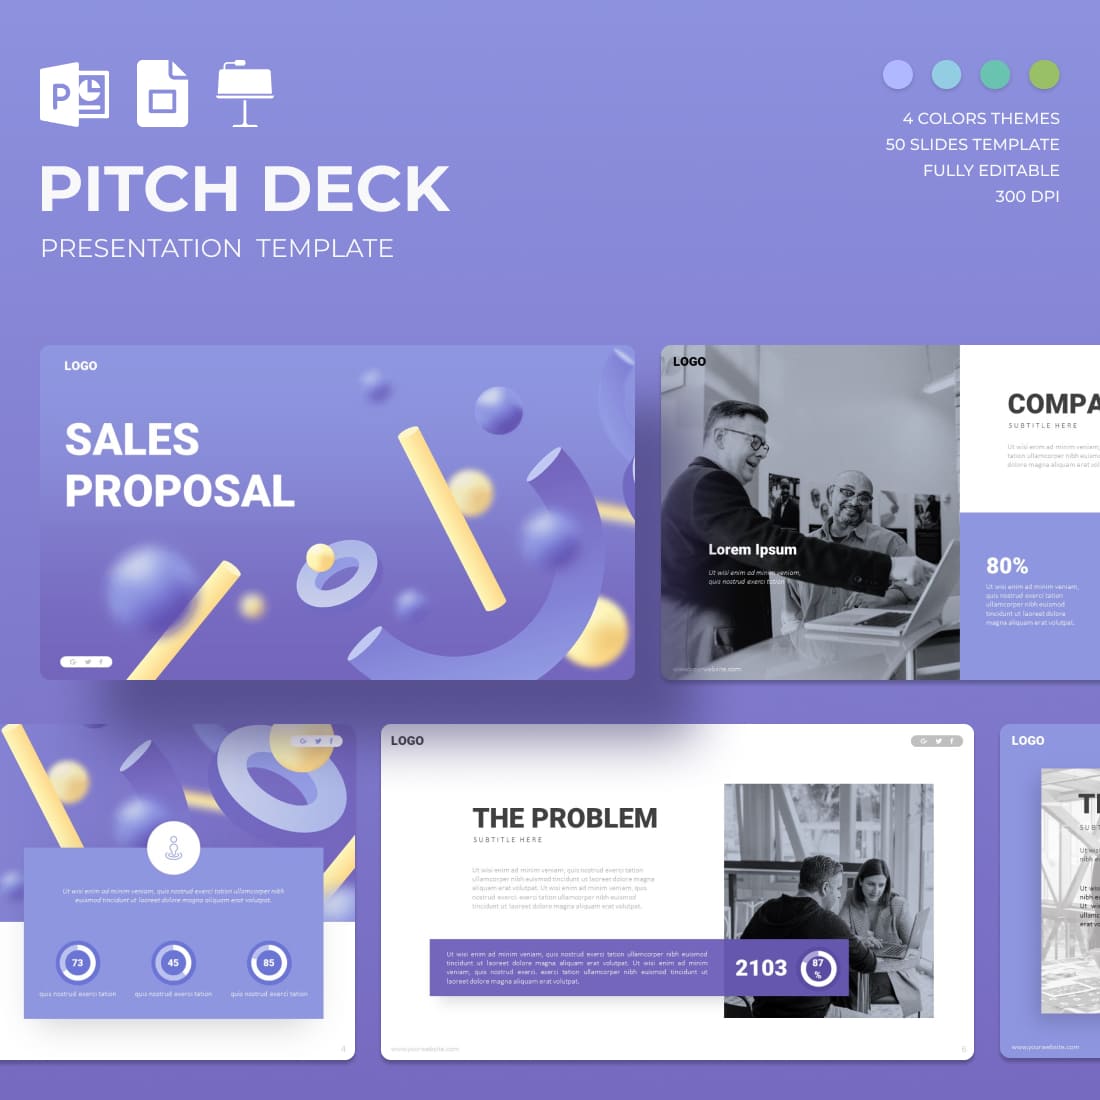 Sales Proposal Pitch Deck Presentation Template.